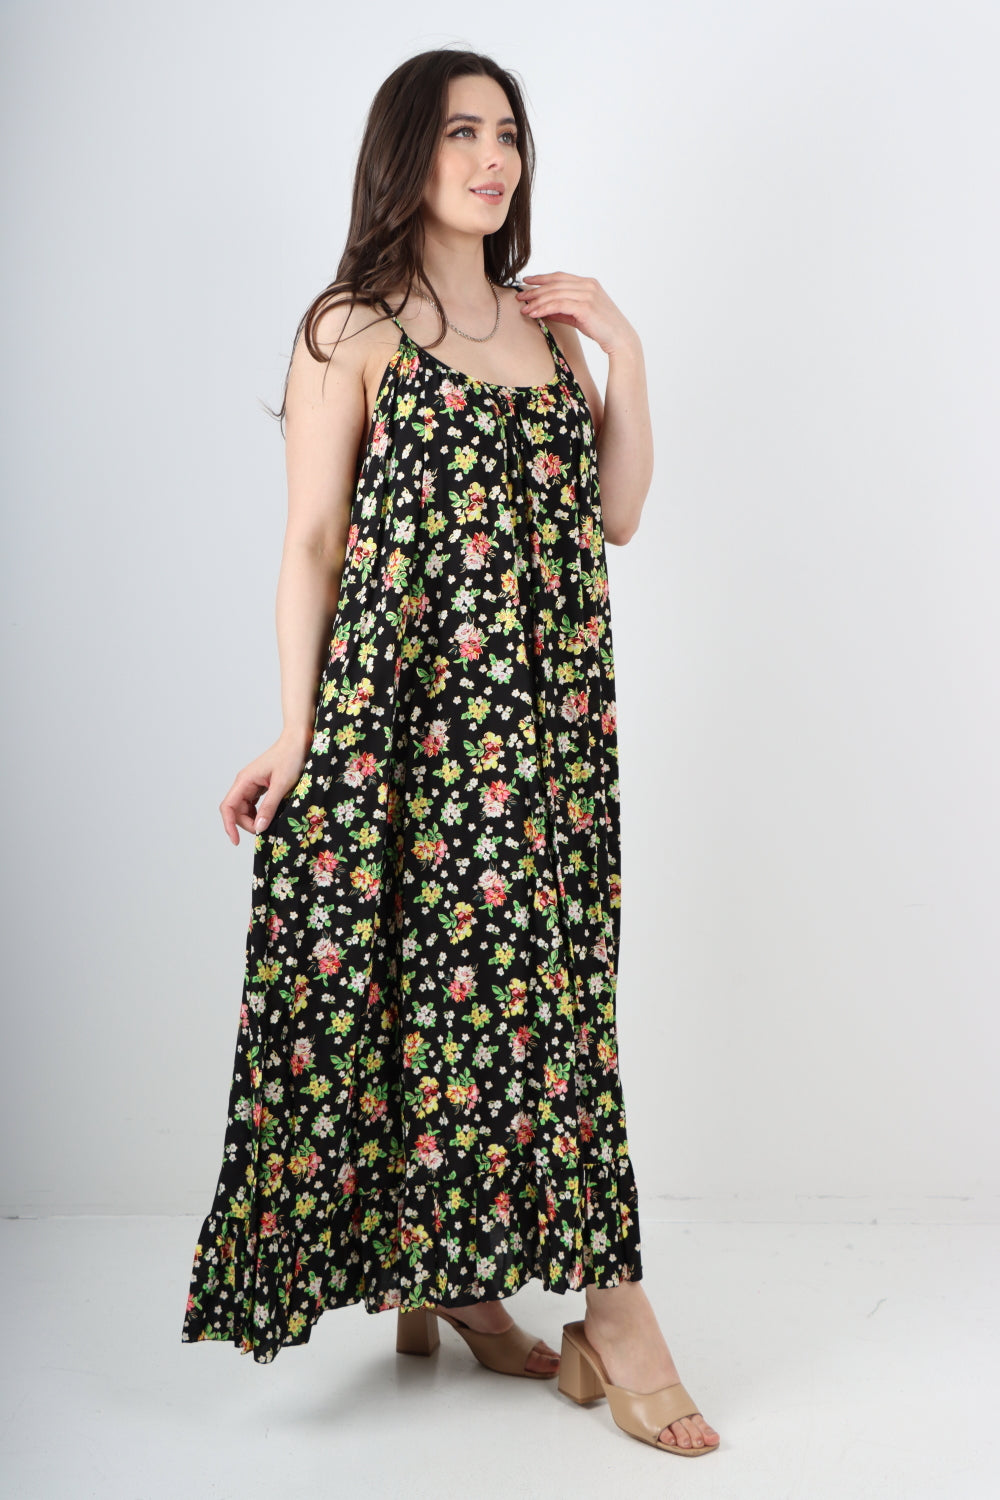 Italian Floral Print  Frill Bottom Sleeveless Vest Sun Dress